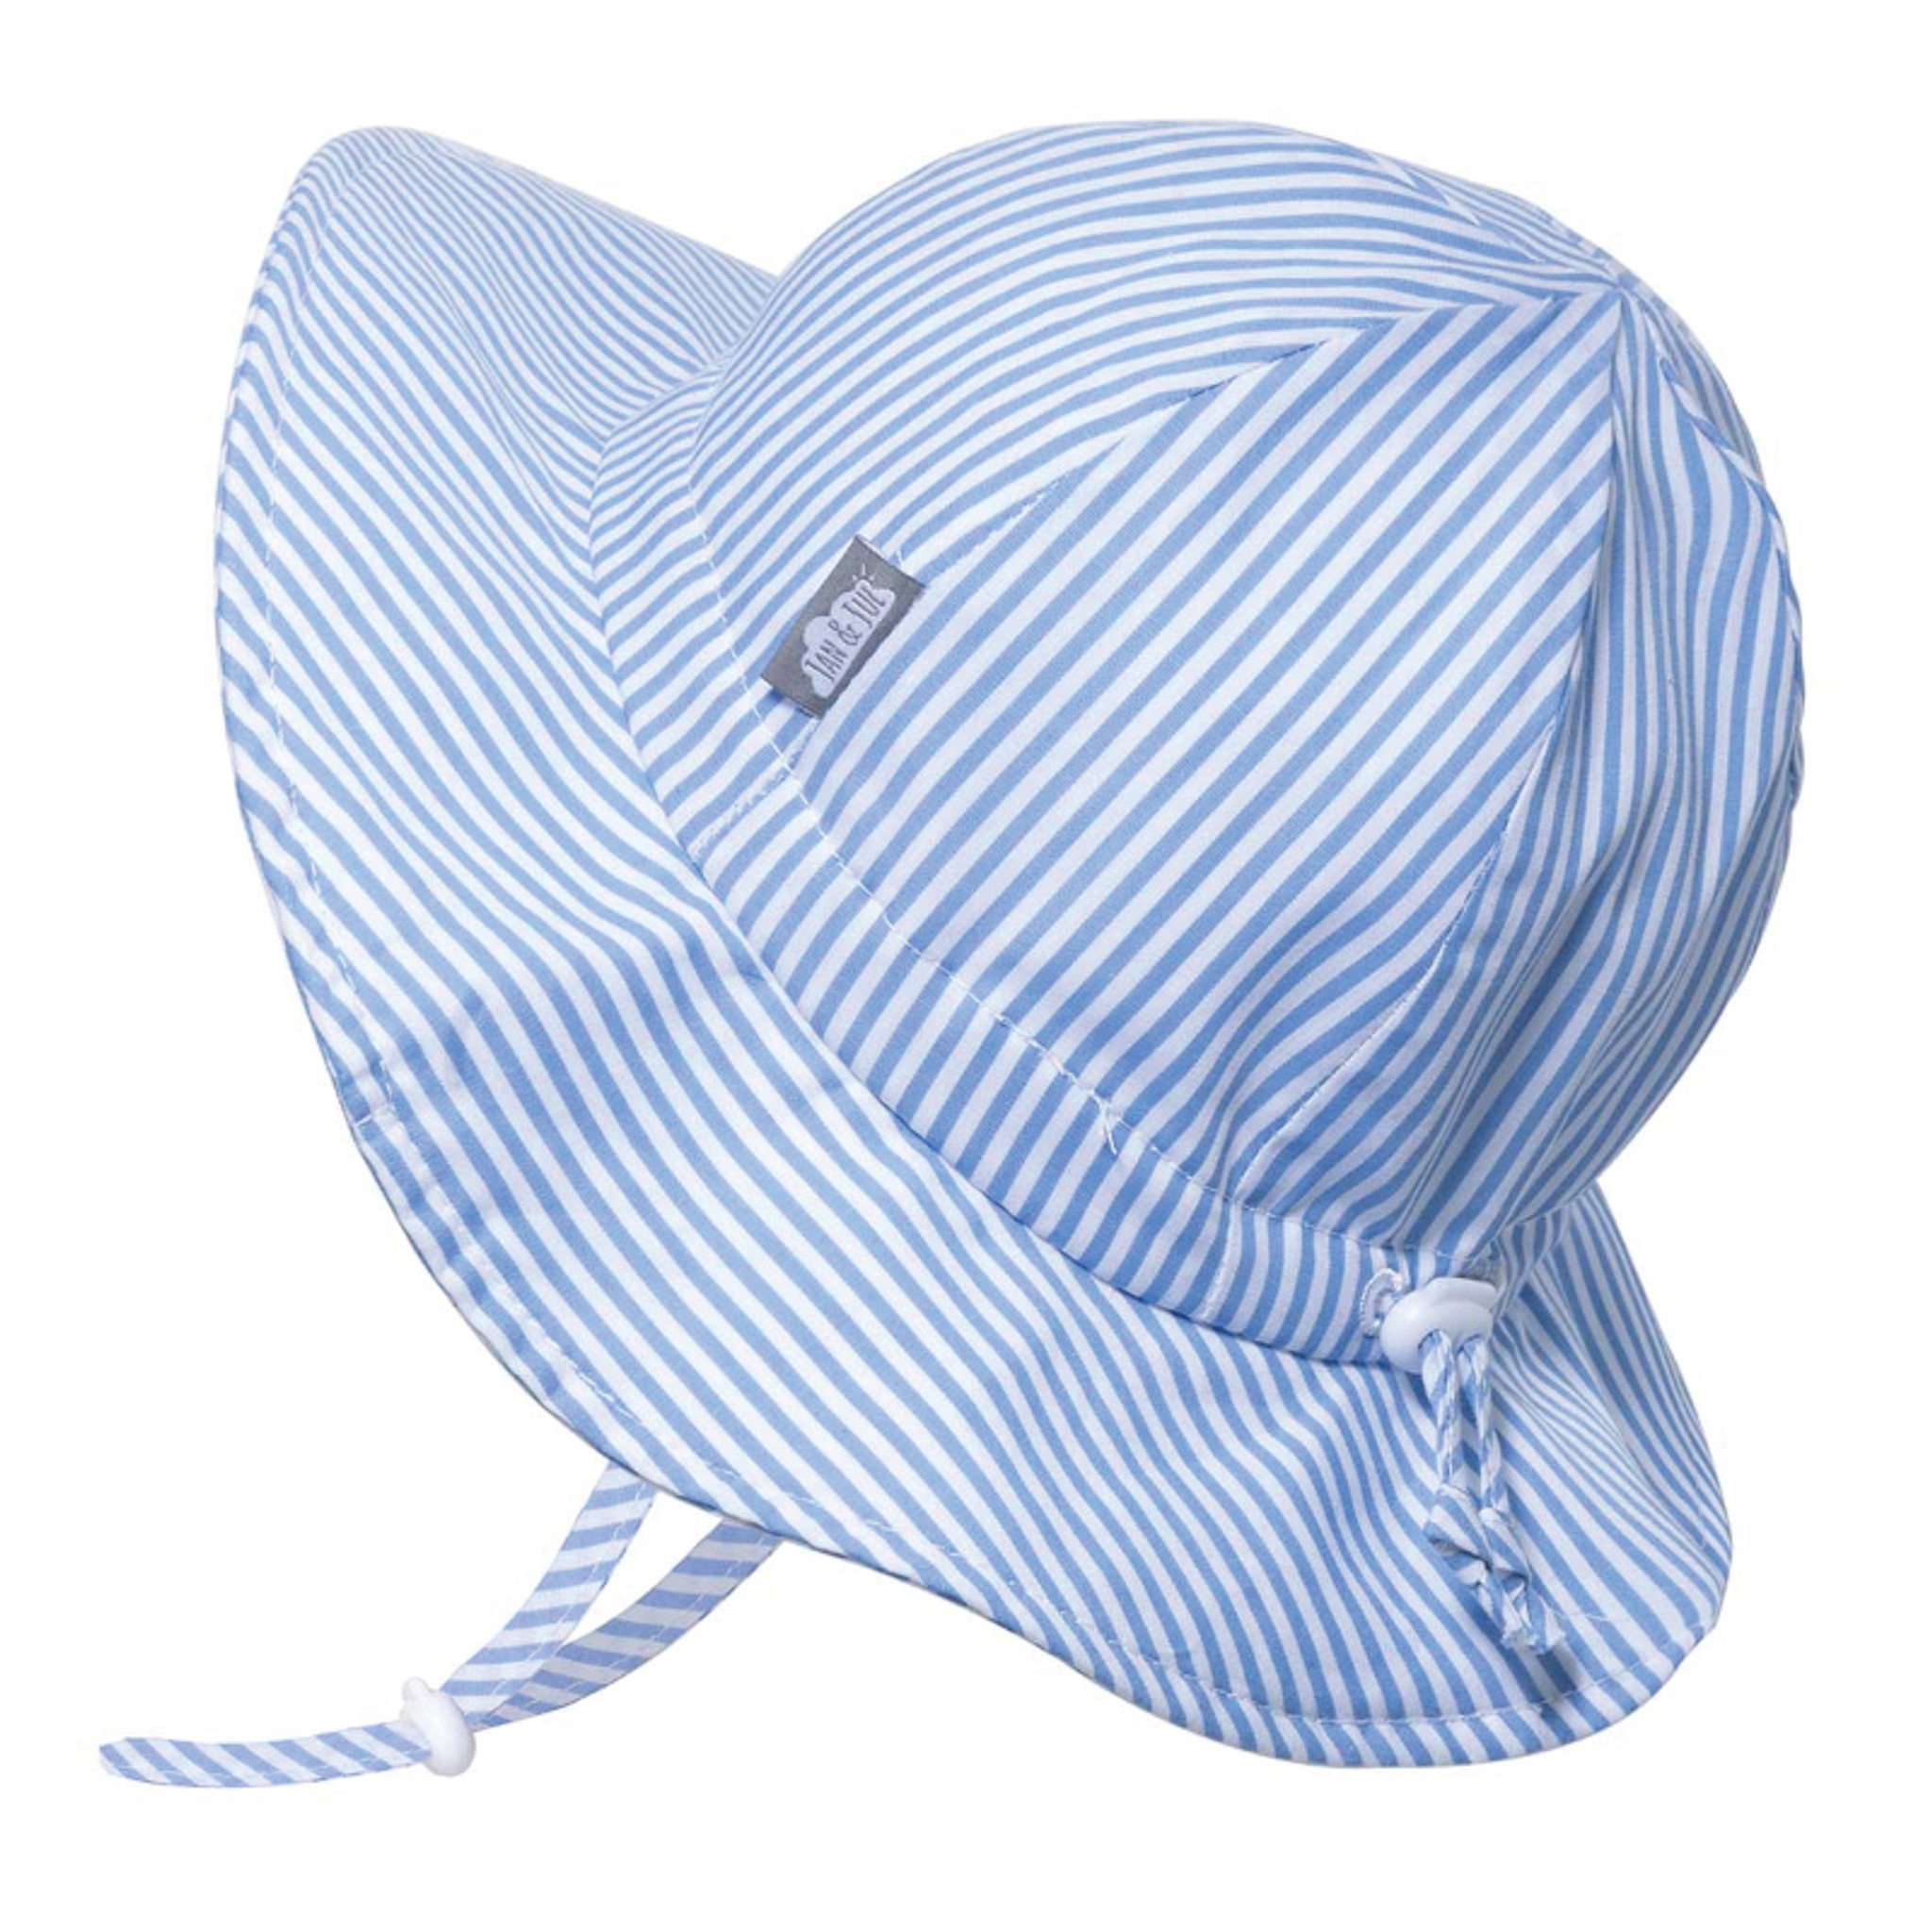 Jan & Jul Cotton Sun Hat Blue Stripe - Sun Hats for Kids - Ava's